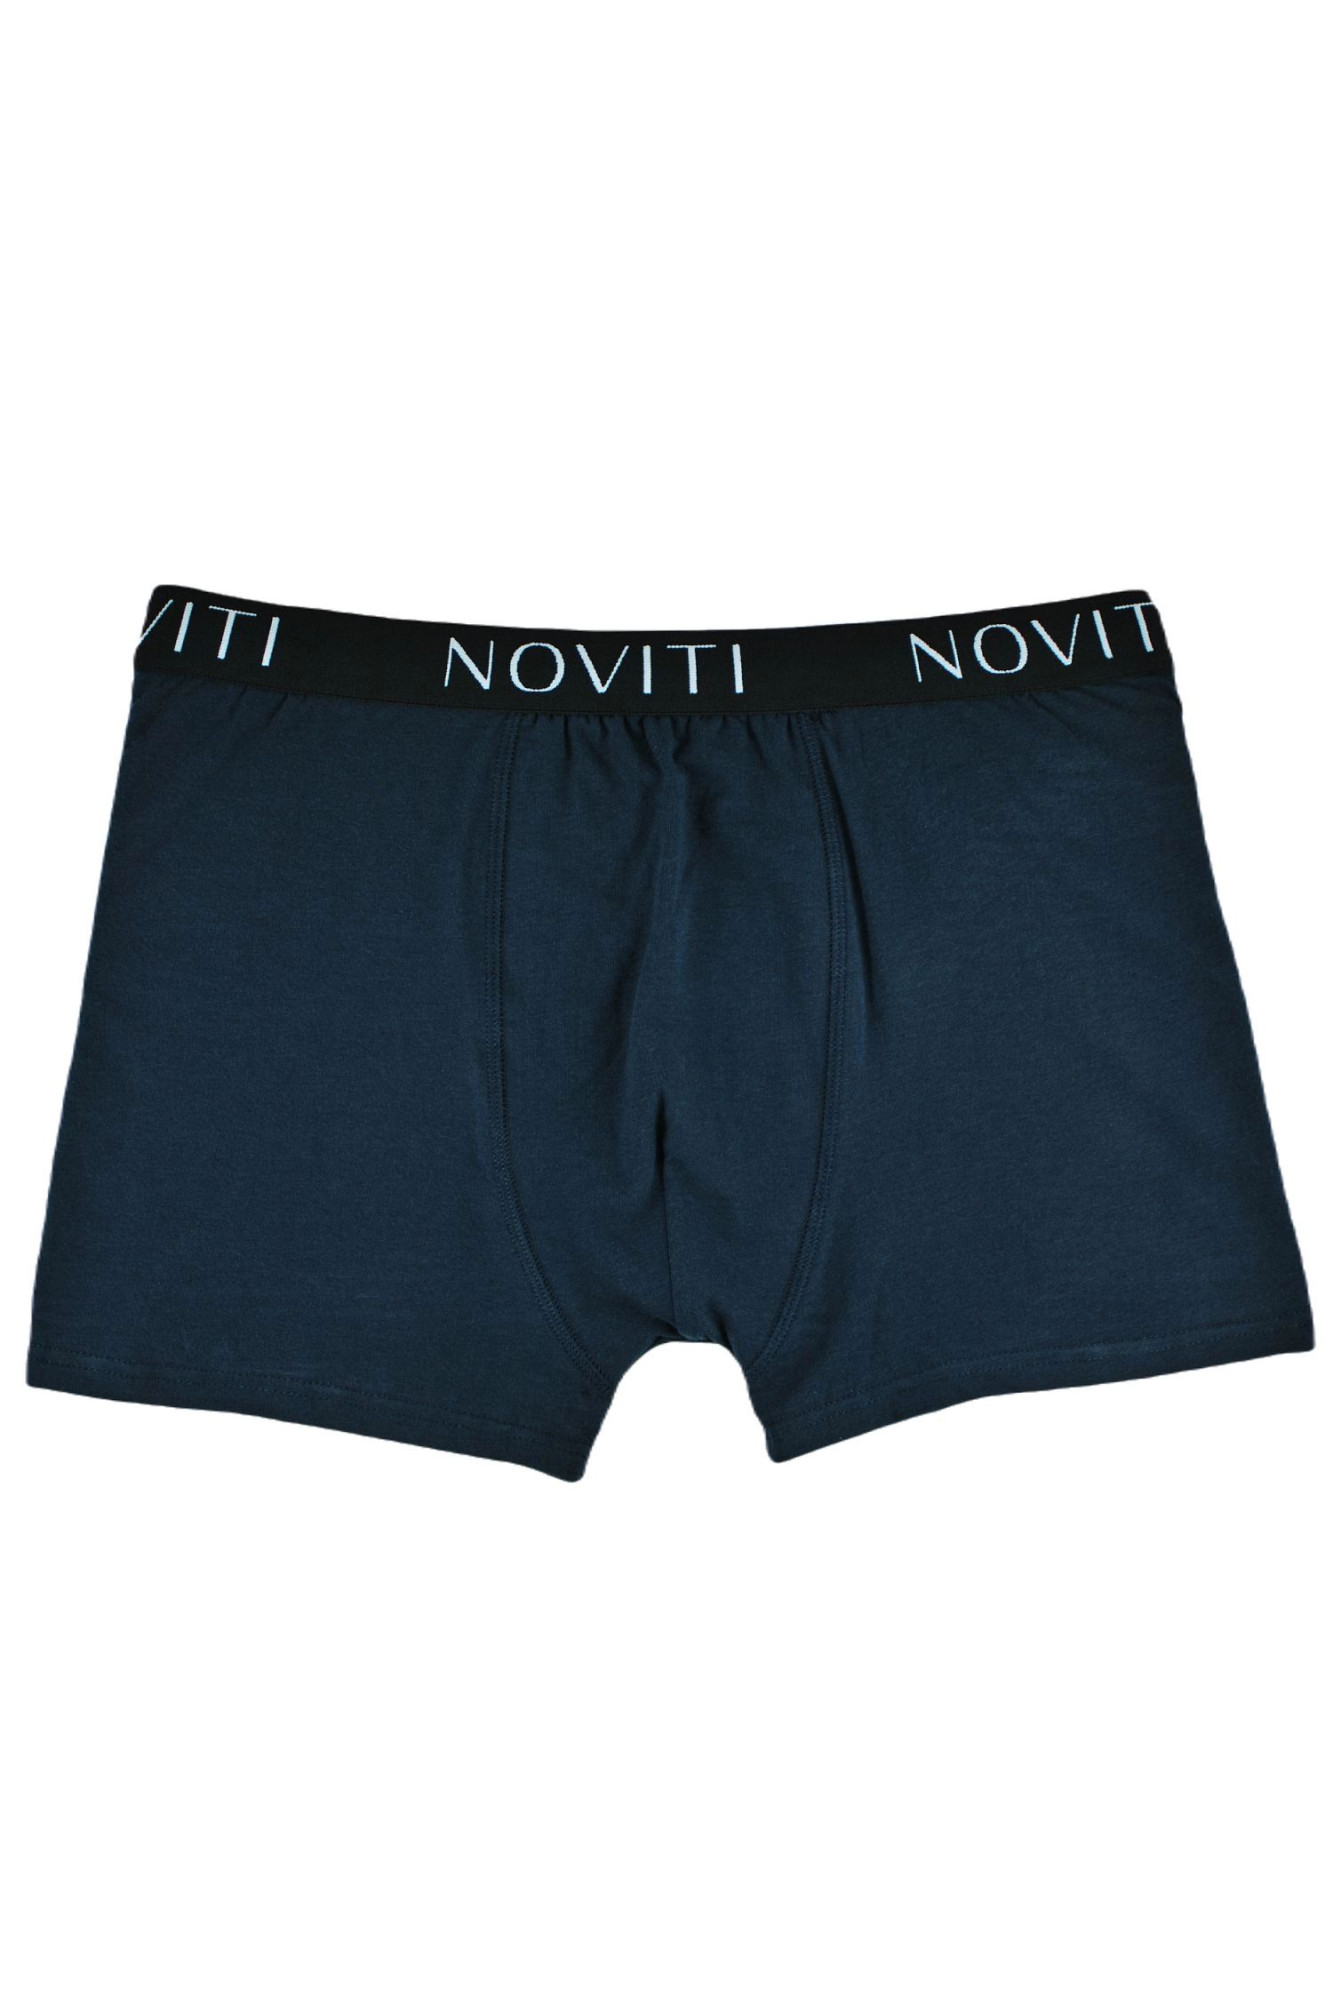 Pánské boxerky 004 03 - NOVITI tmavě modrá XL